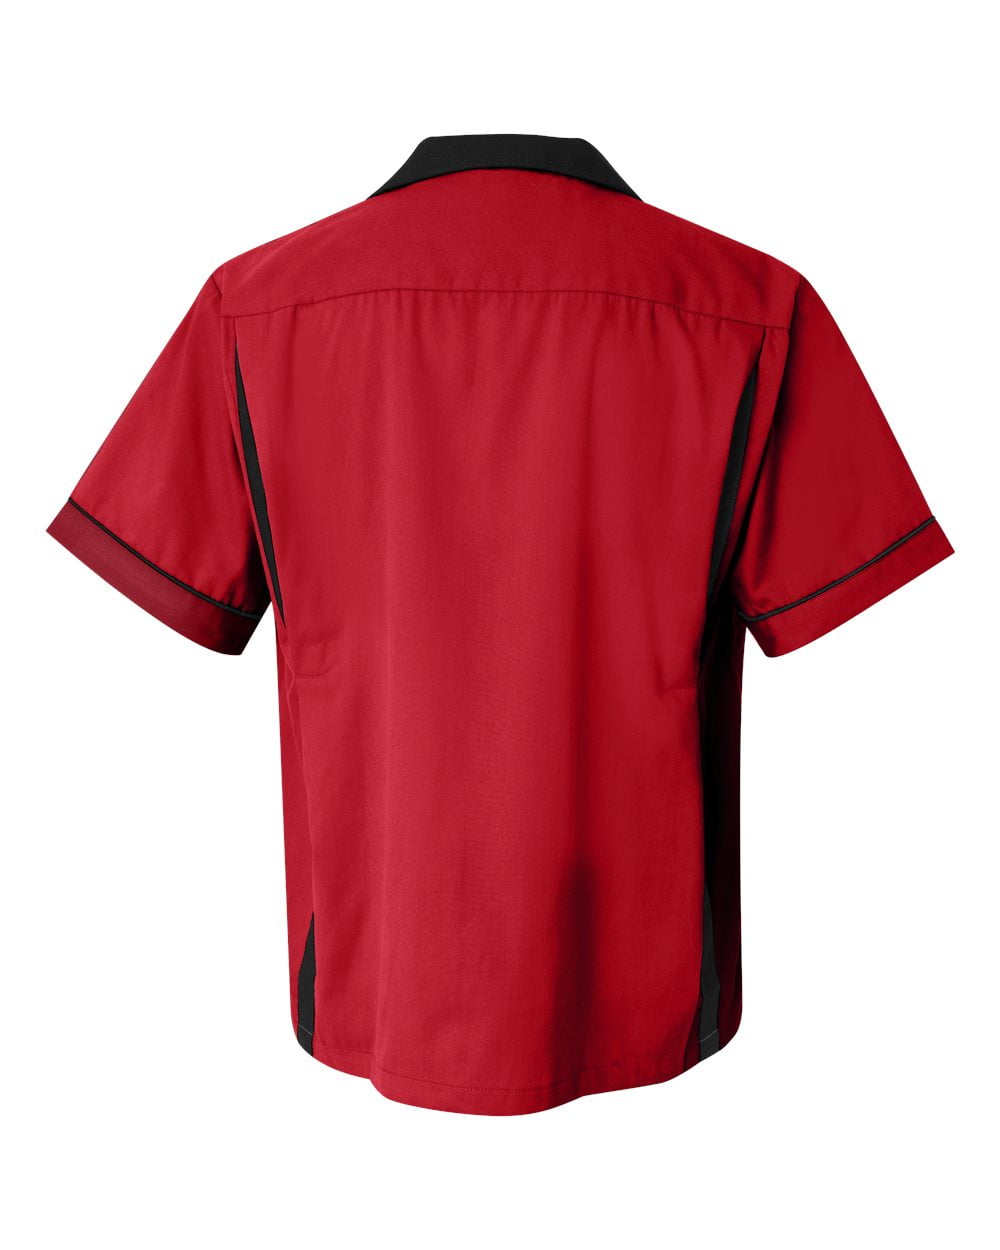 Hilton GM Legend Bowling Shirt Size up to 3XL